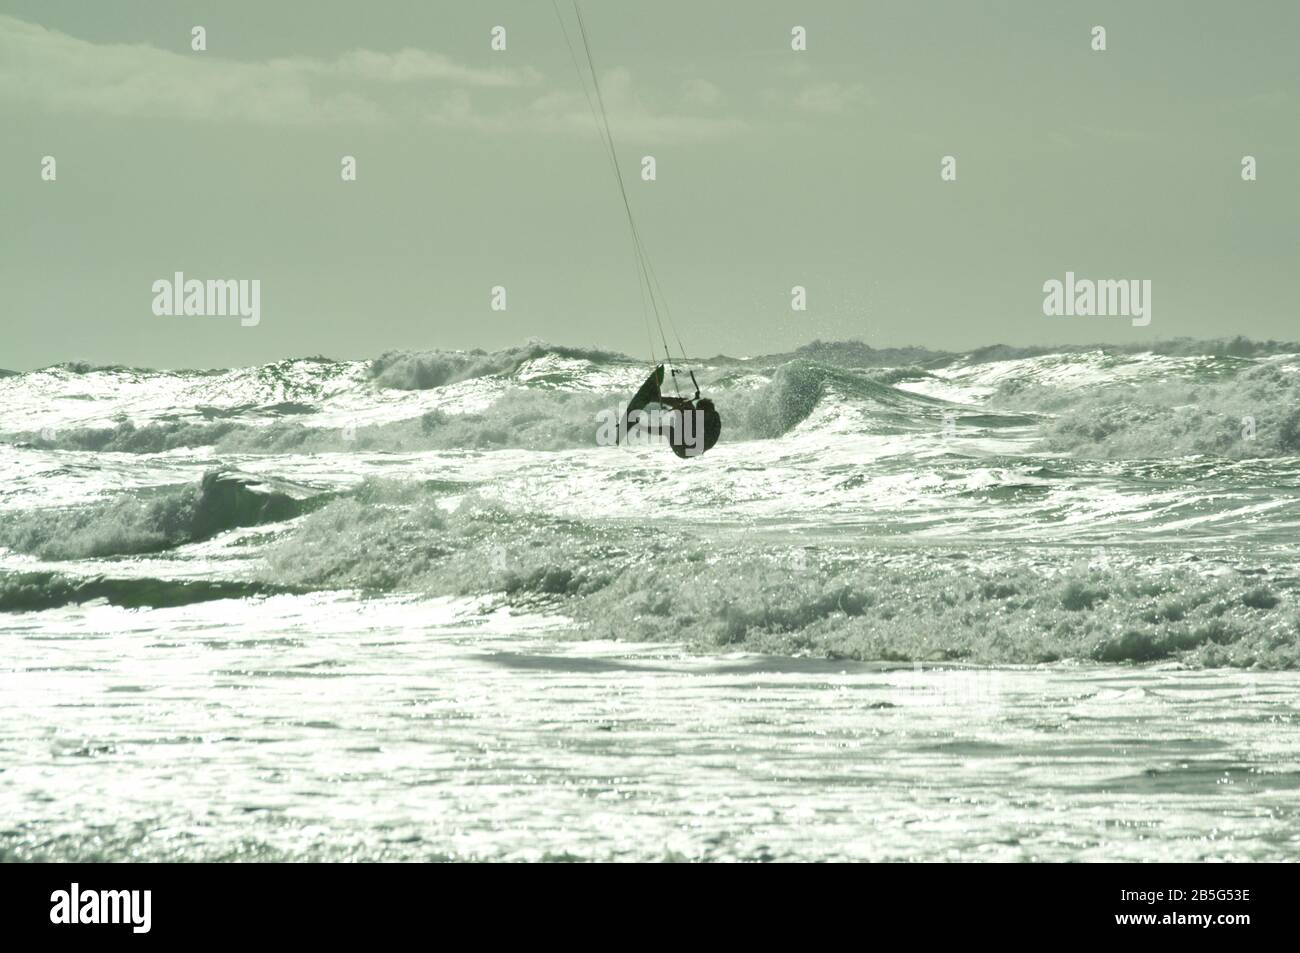 Kite surfer summersaulting in rough seas at Lacanau-Océan, France Stock Photo